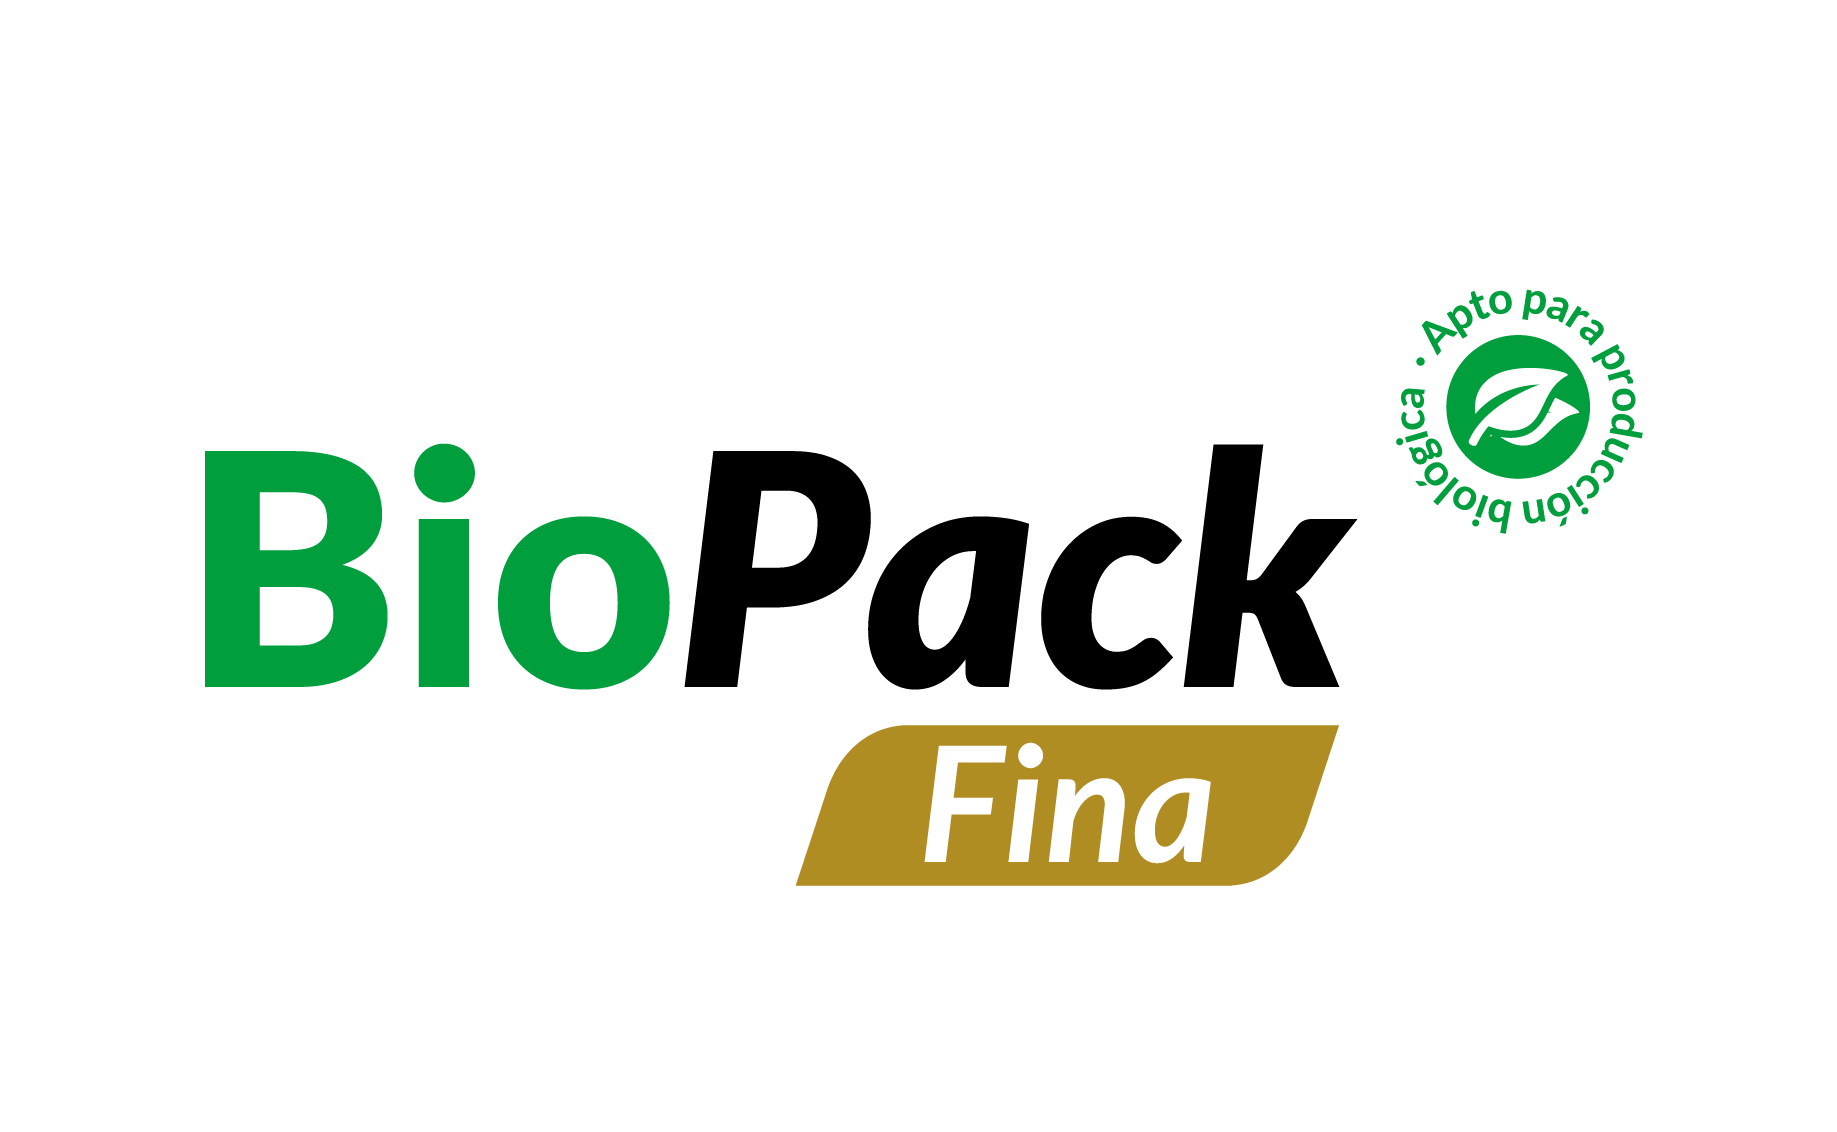 Biopack Fina